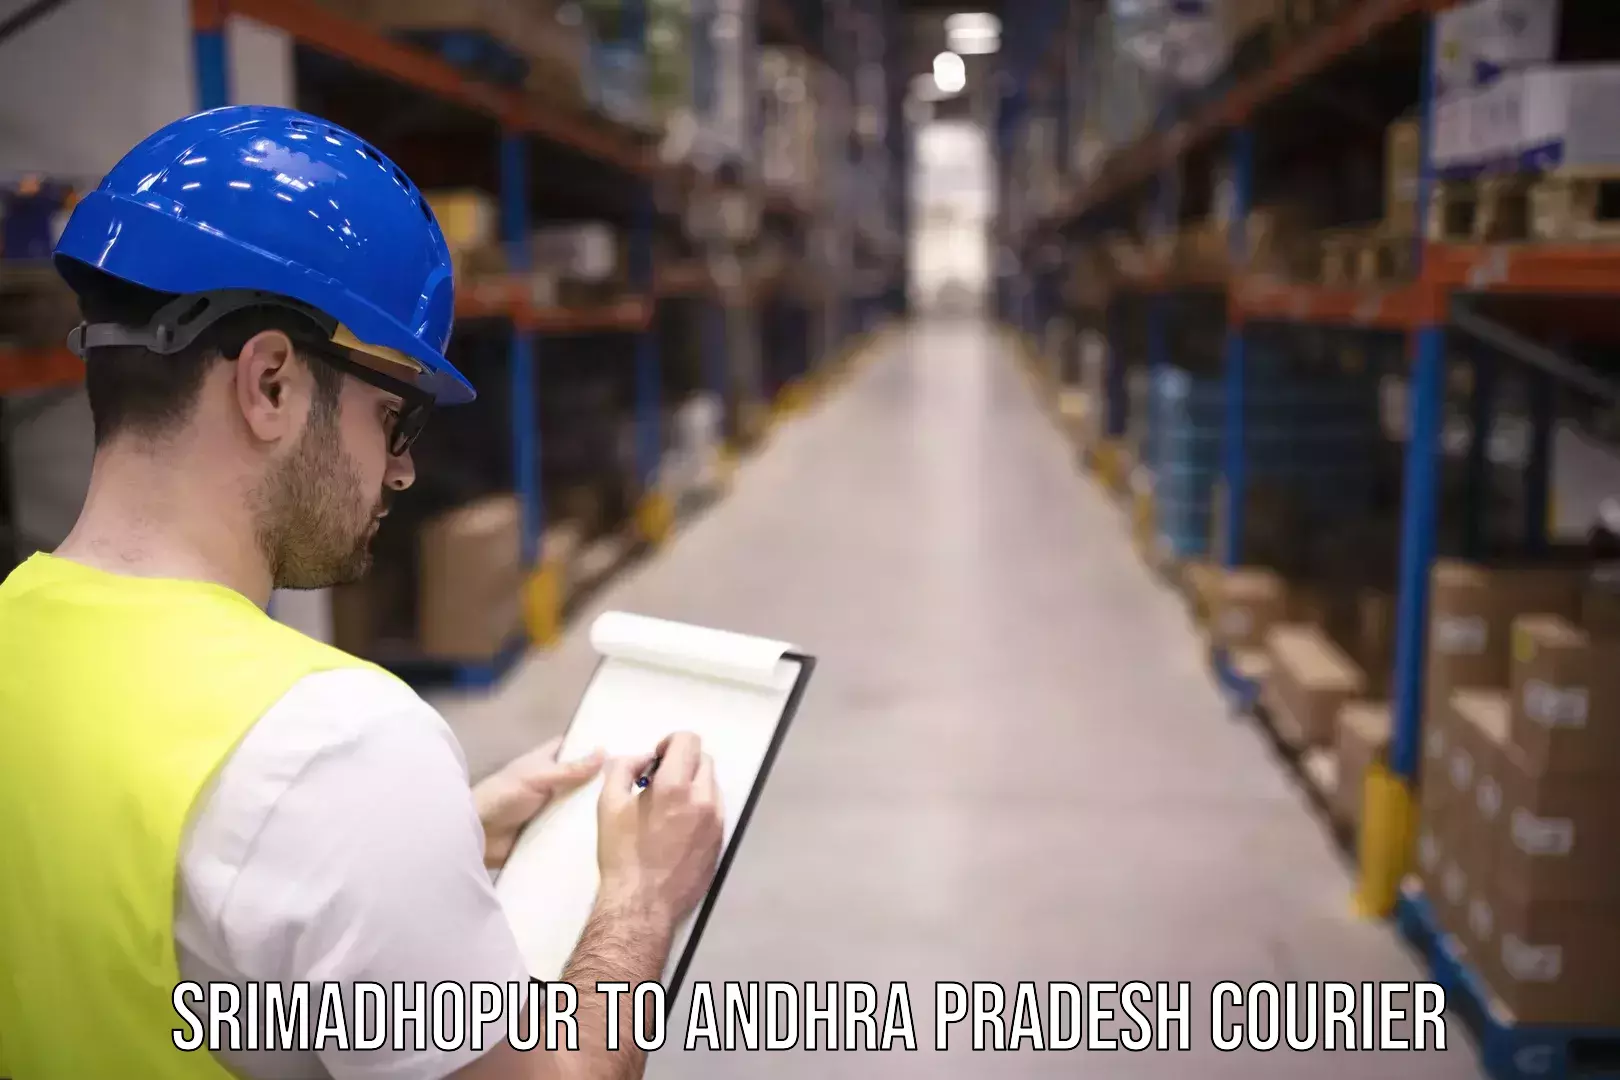 Professional courier handling Srimadhopur to Guntur